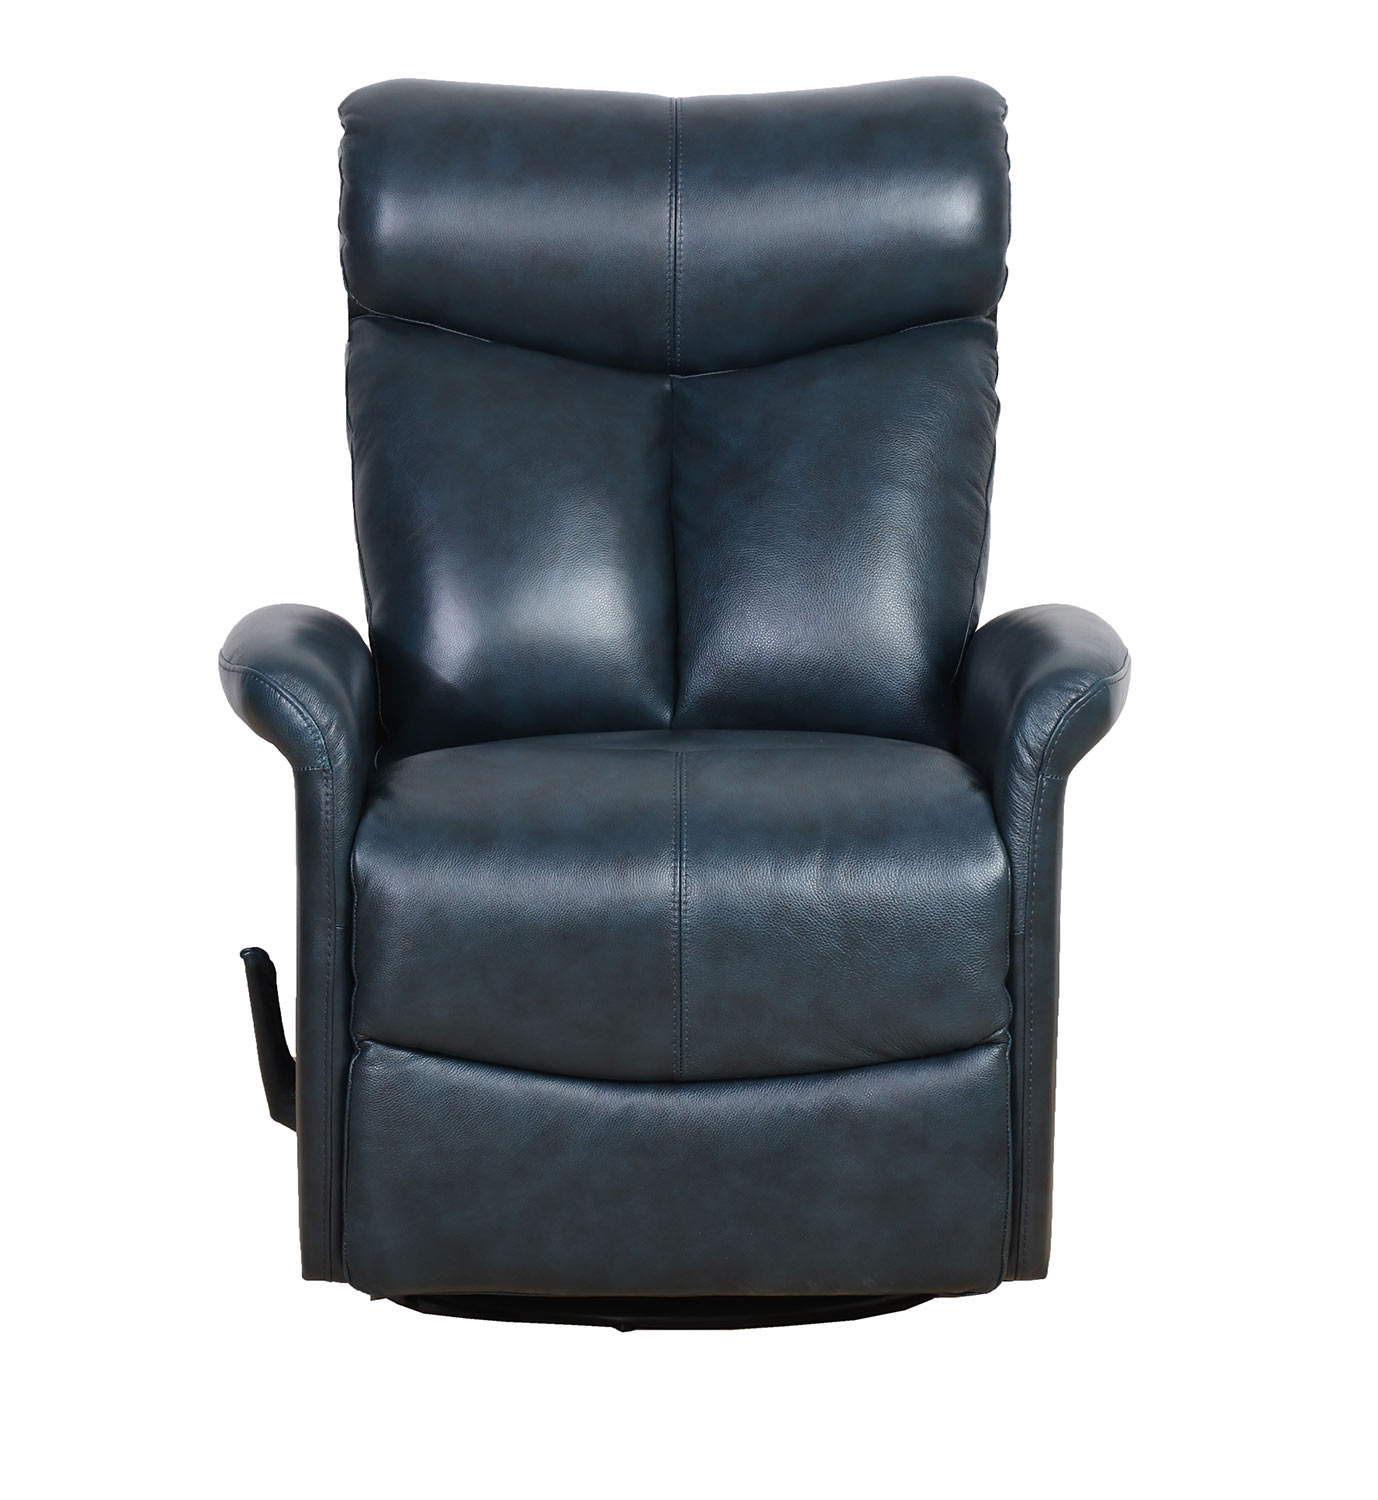 Barcalounger Diego Swivel Glider Recliner Chair - Ryegate Sapphire Blue/Leather Match